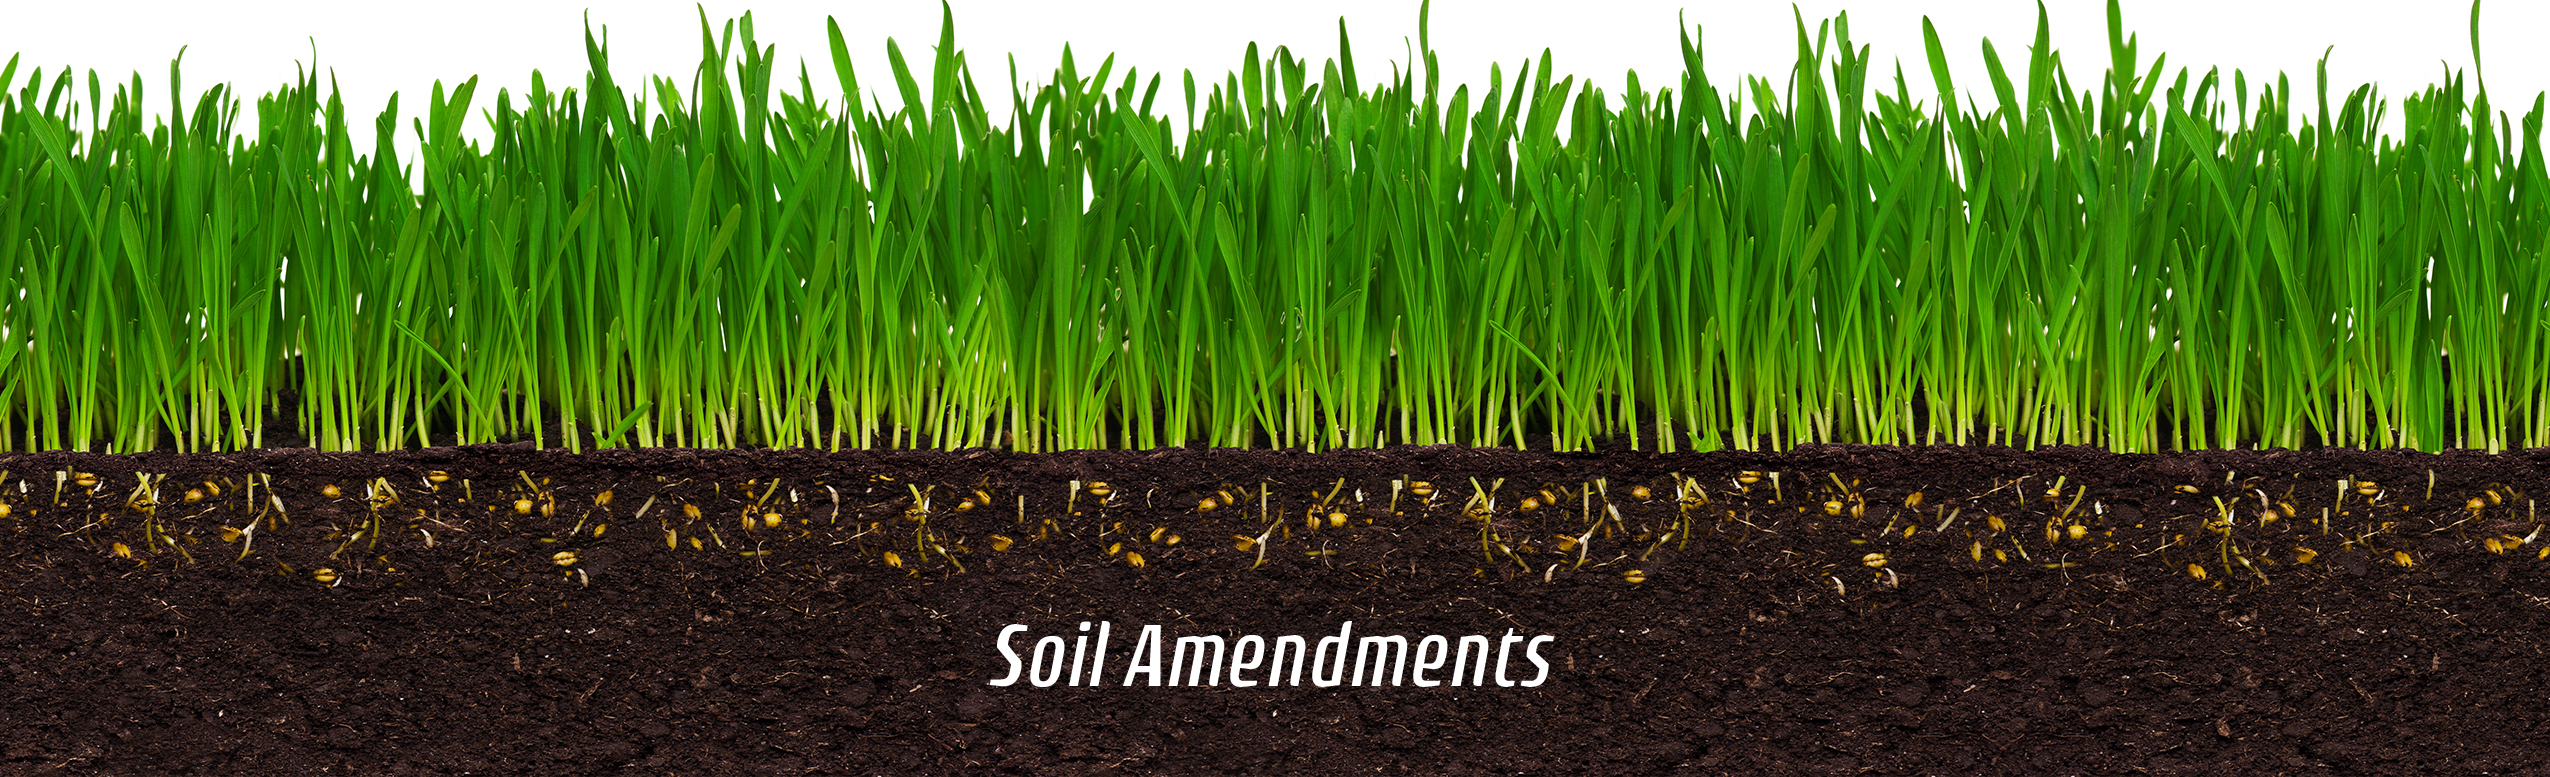 Best Organic Soil Amendments | What is a Soil Amendment?